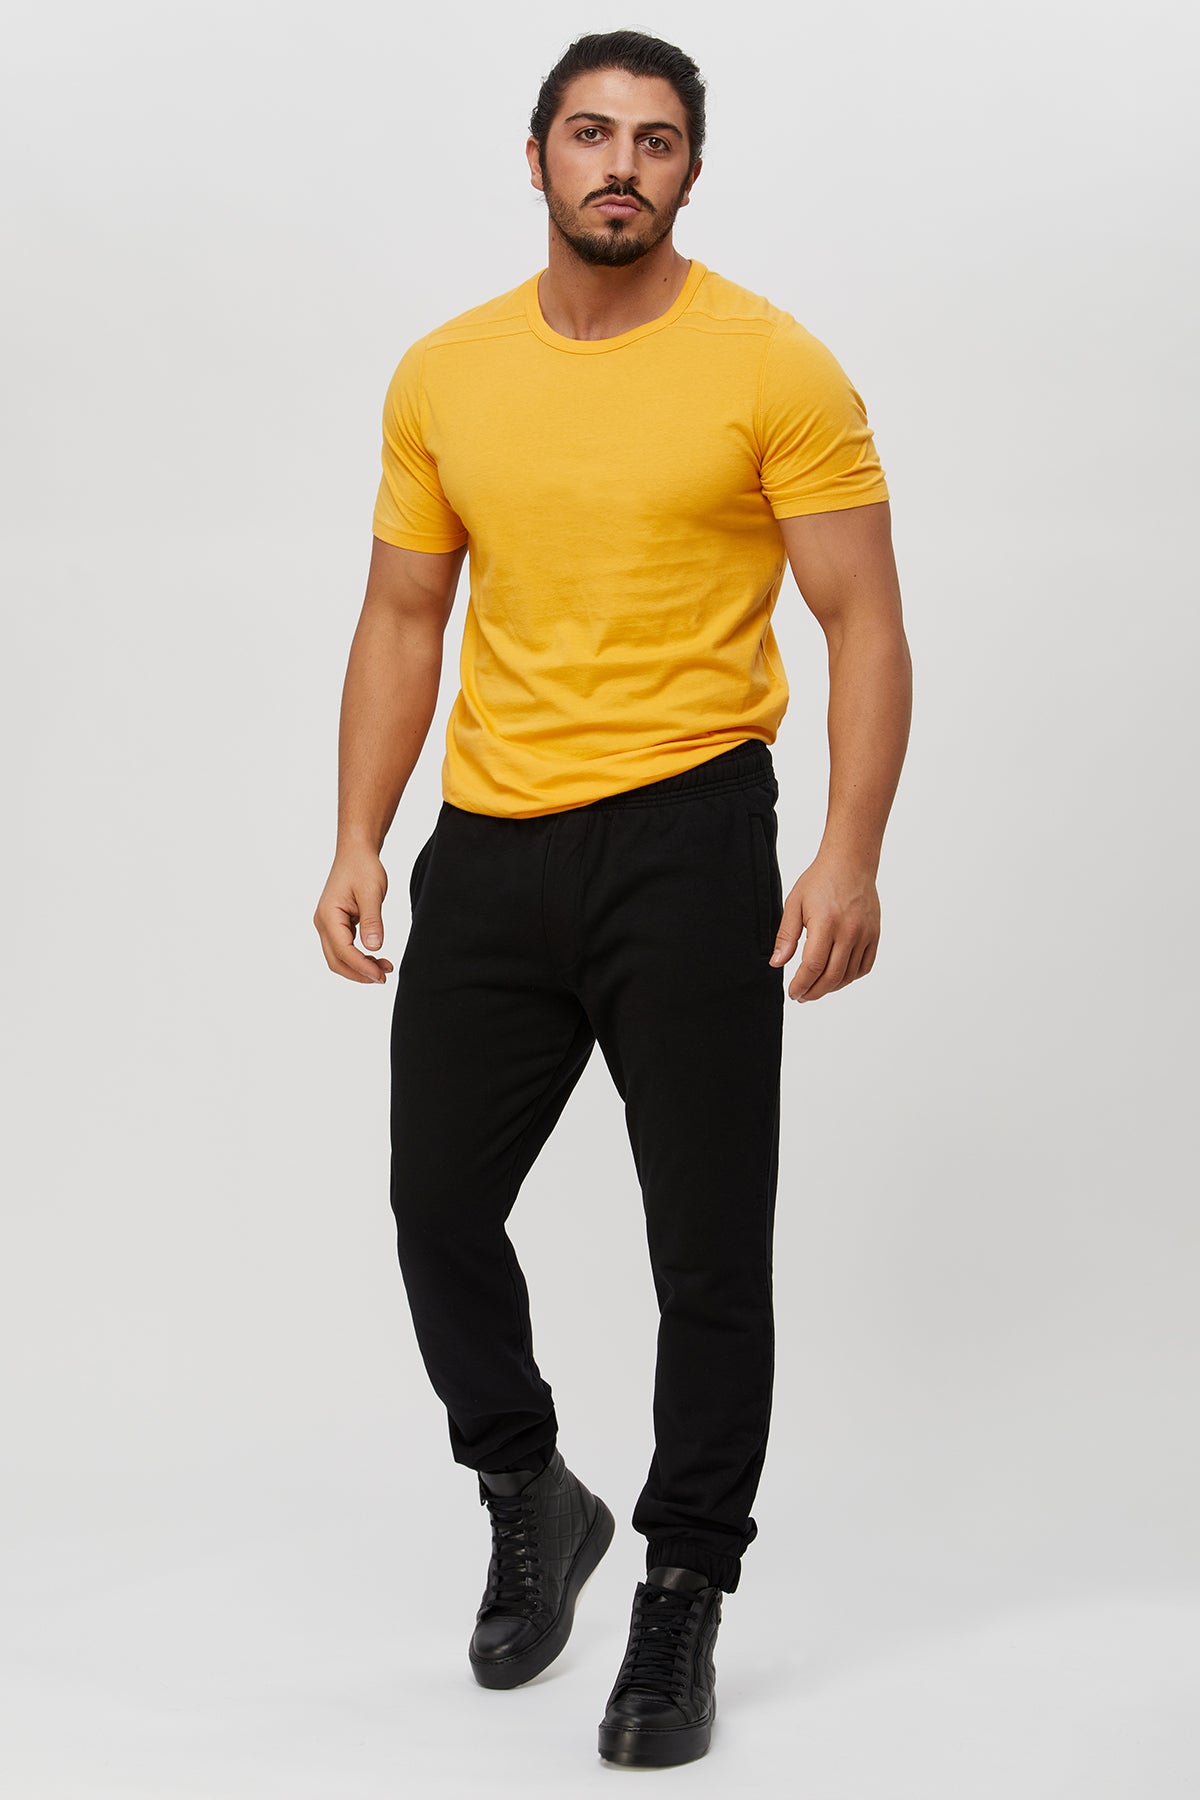 Men's sweatpants - active fleece joggers. 100 % great quality Turkish Pima  cotton preshrunk. Zippered pockets. Sports. Gym ,Yoga, Fitness.